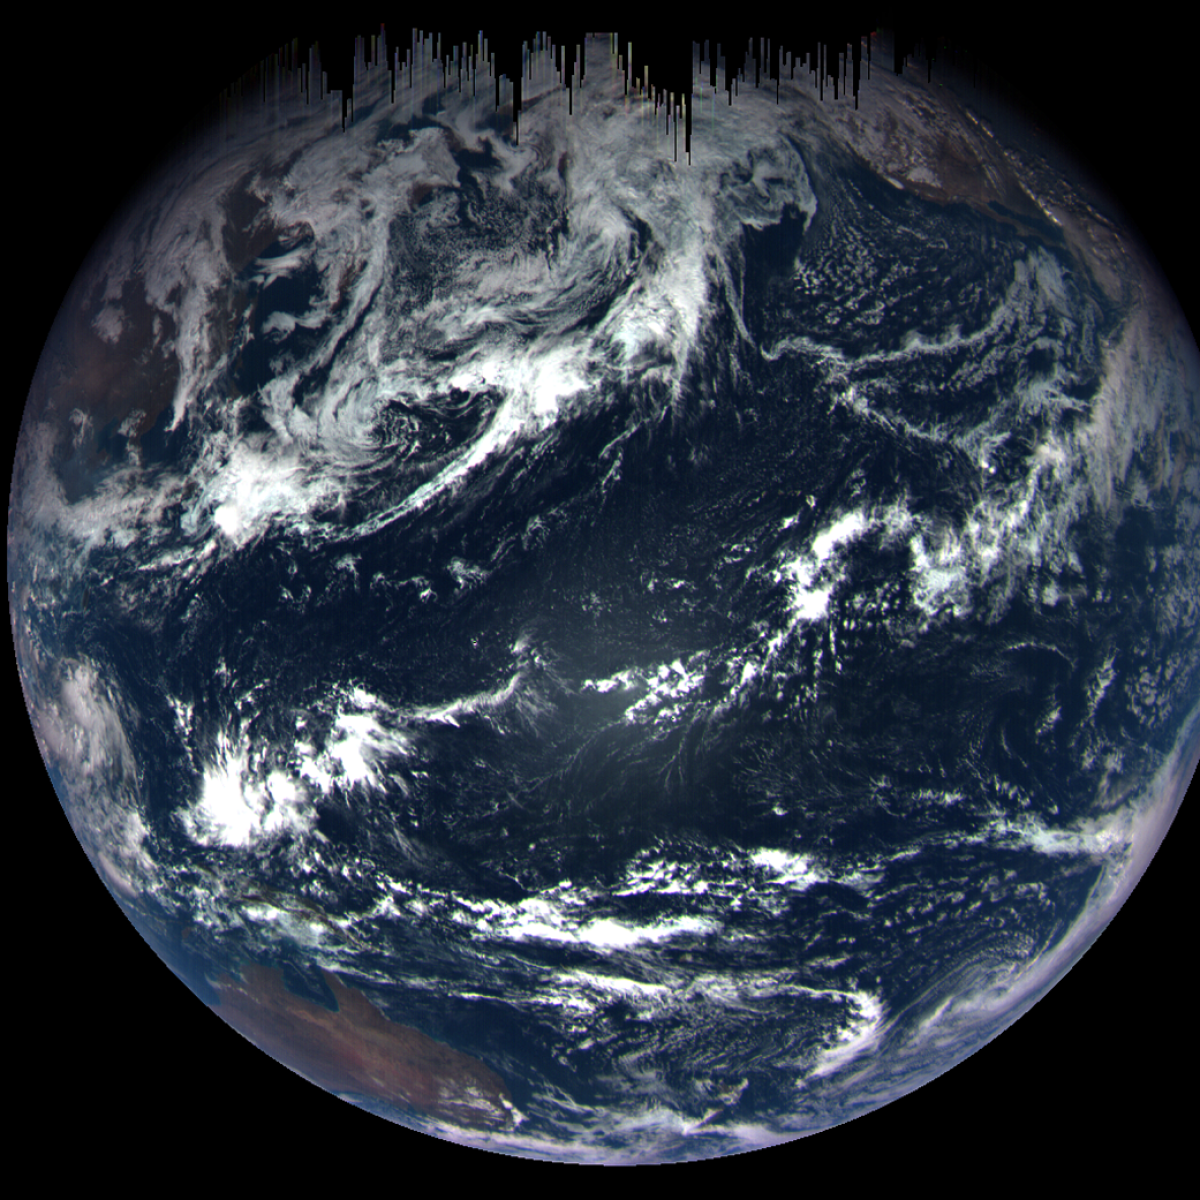 03_28_osirisrex_earth_habitable